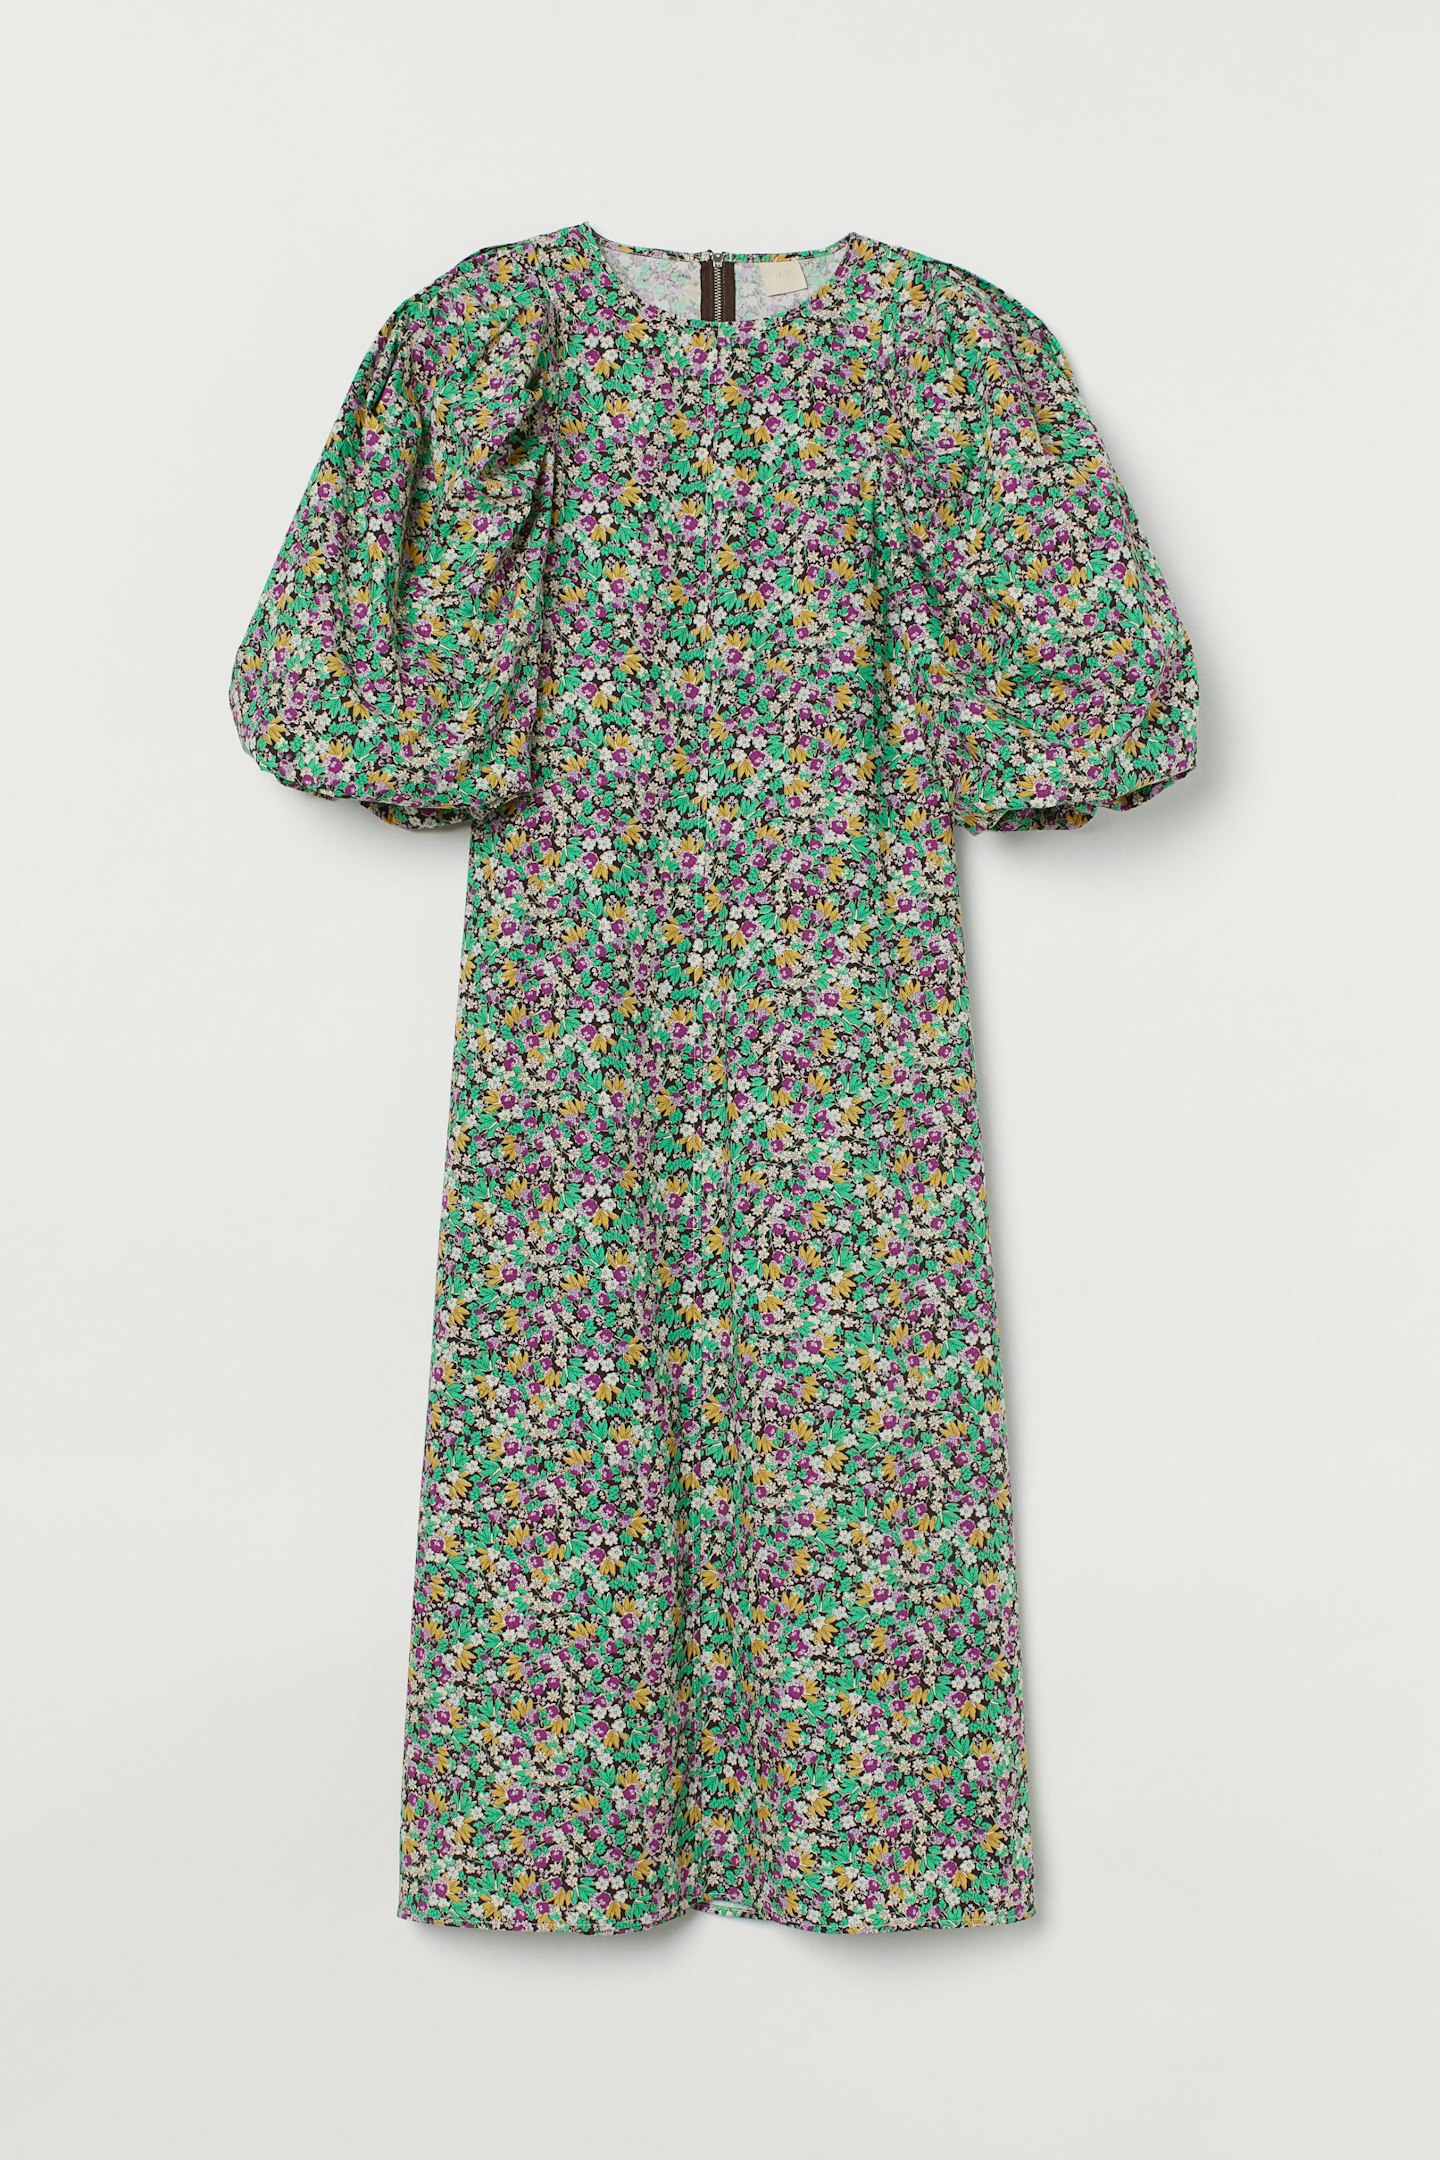 H&M, Balloon-Sleeve Dress, £39.99